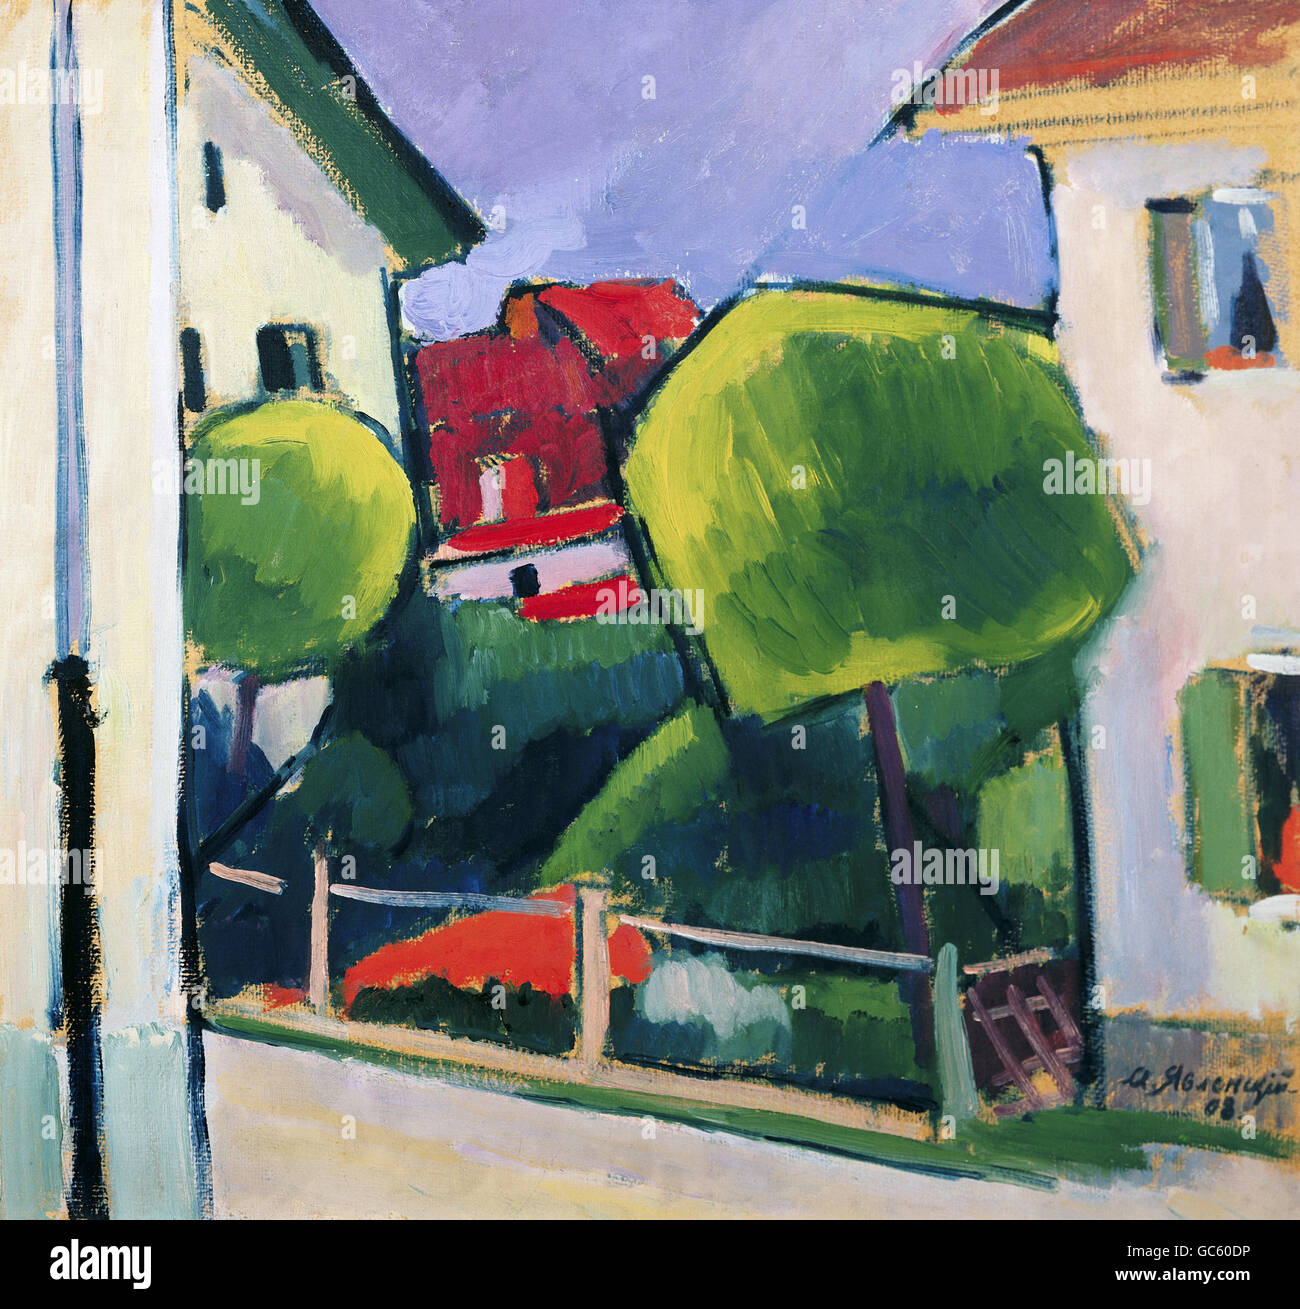 fine arts, Jawlensky, Alexej von (1864 - 1941), 'Murnau', painting, 1908, oil on paperboard, 53x48,5 cm, Franz Marc Museum, Kochel am See, Stock Photo